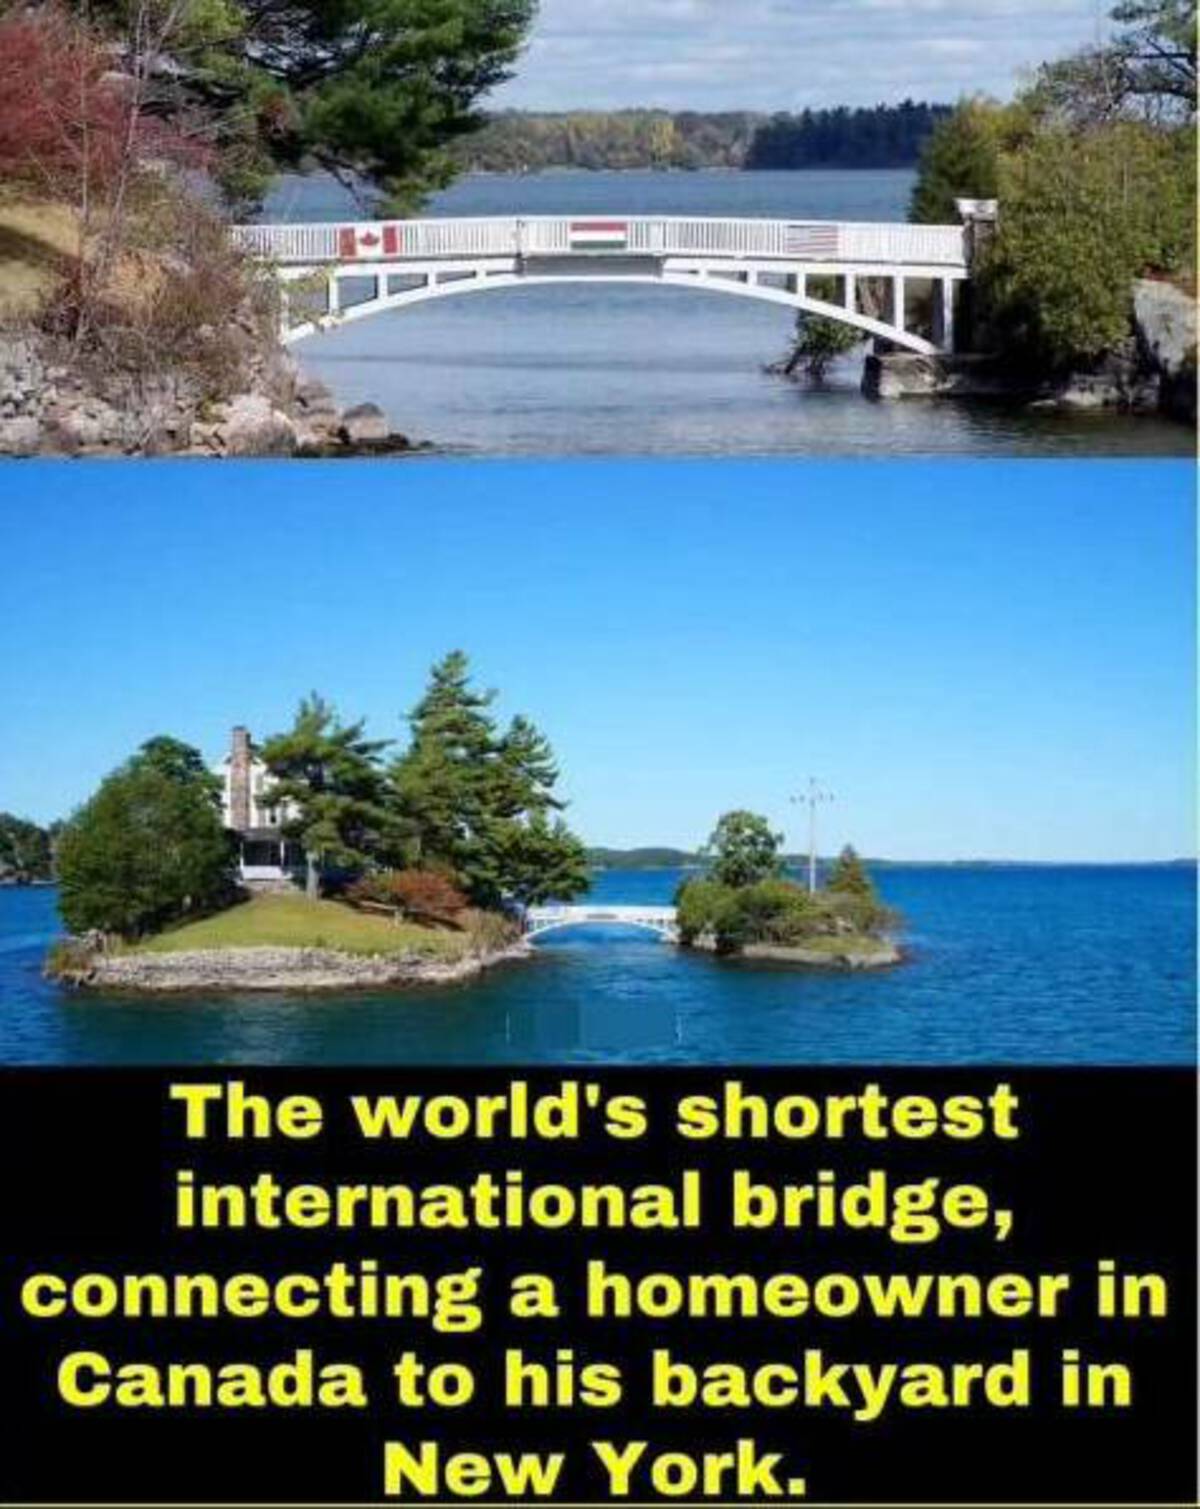 zavikon island - The world's shortest international bridge, connecting a homeowner in Canada to his backyard in New York.